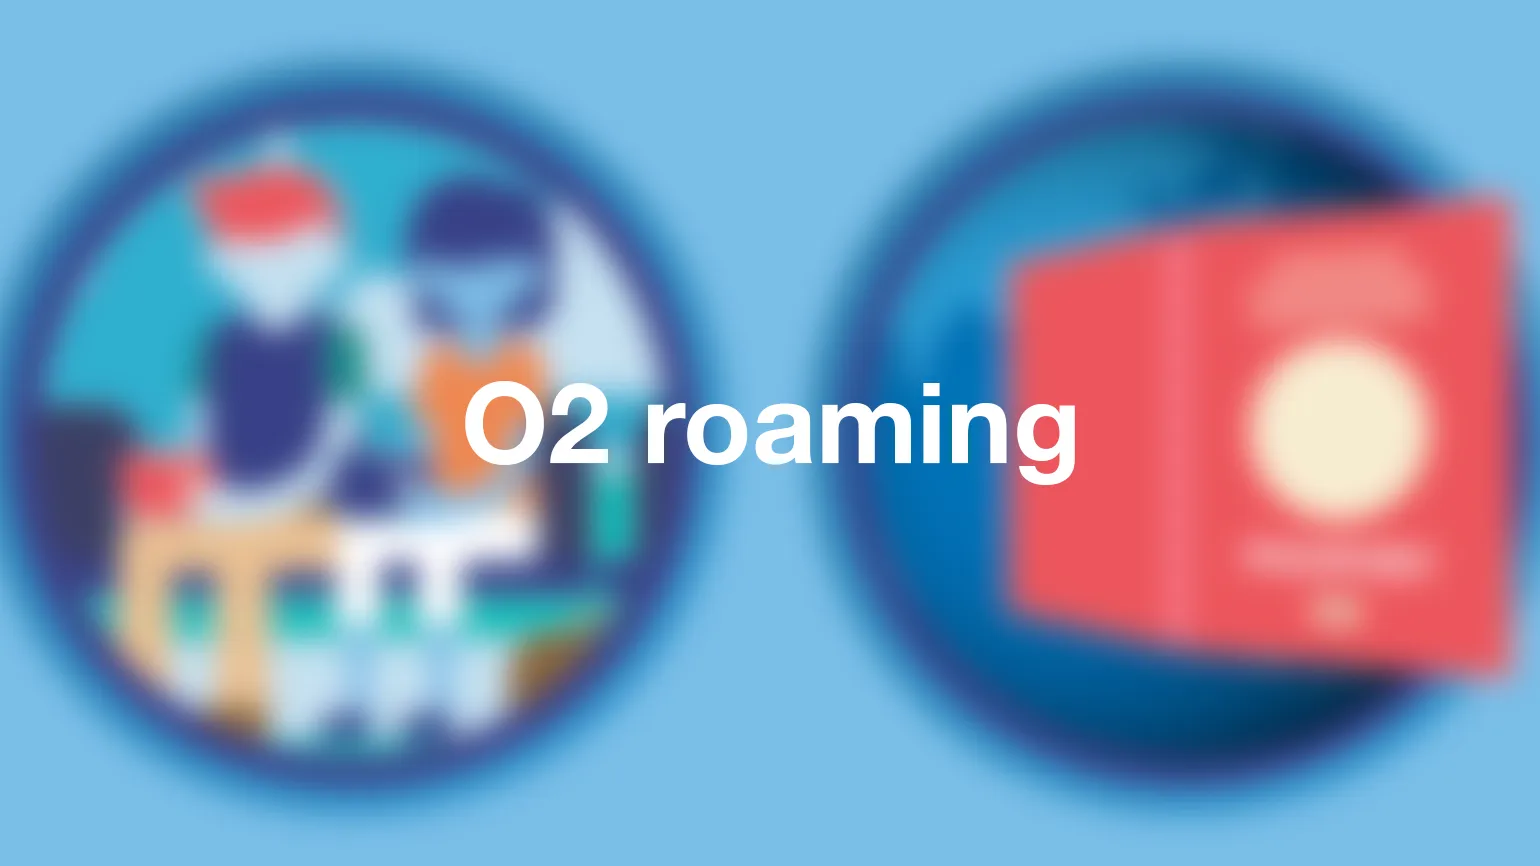 O2 roaming - International roaming with O2 explained